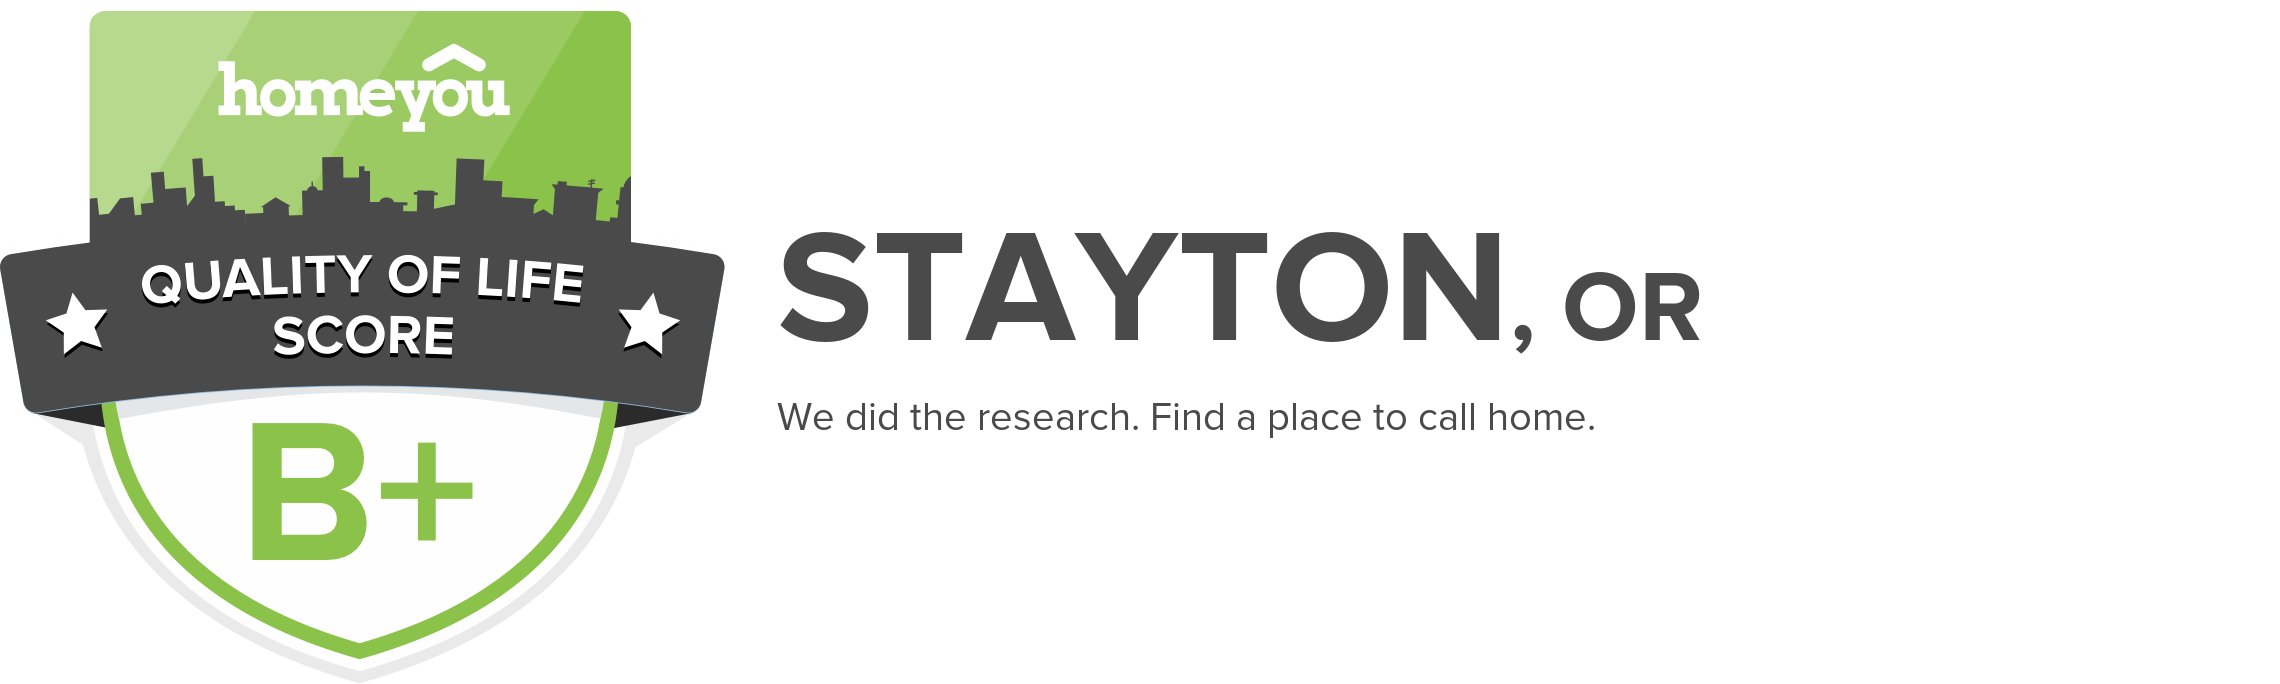 Stayton, OR